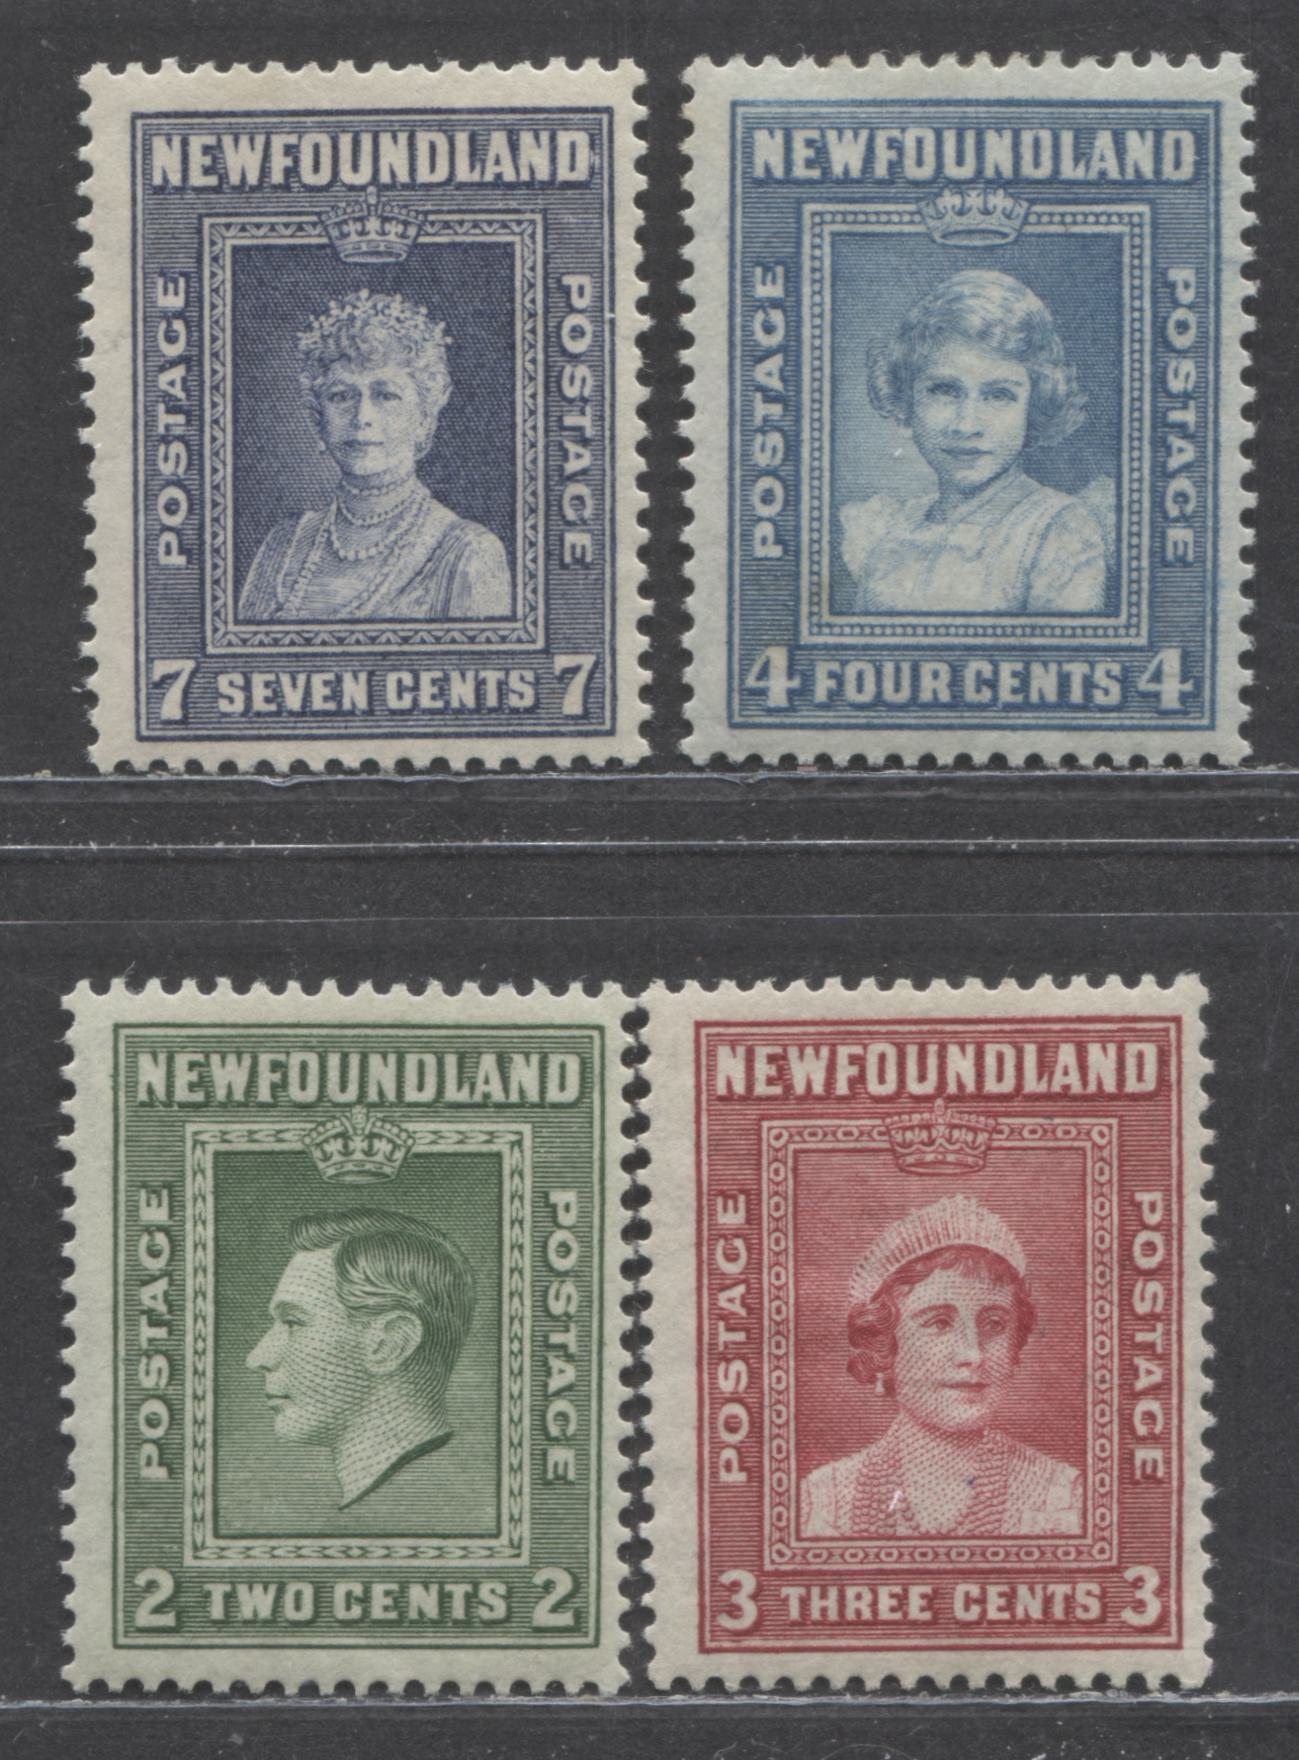 Lot 226 Newfoundland #245-248 2c - 7c Green - Dark Ultramarine King George VI - Queen Mary, 1938 Royal Family Issue, 4 F/VFOG Singles